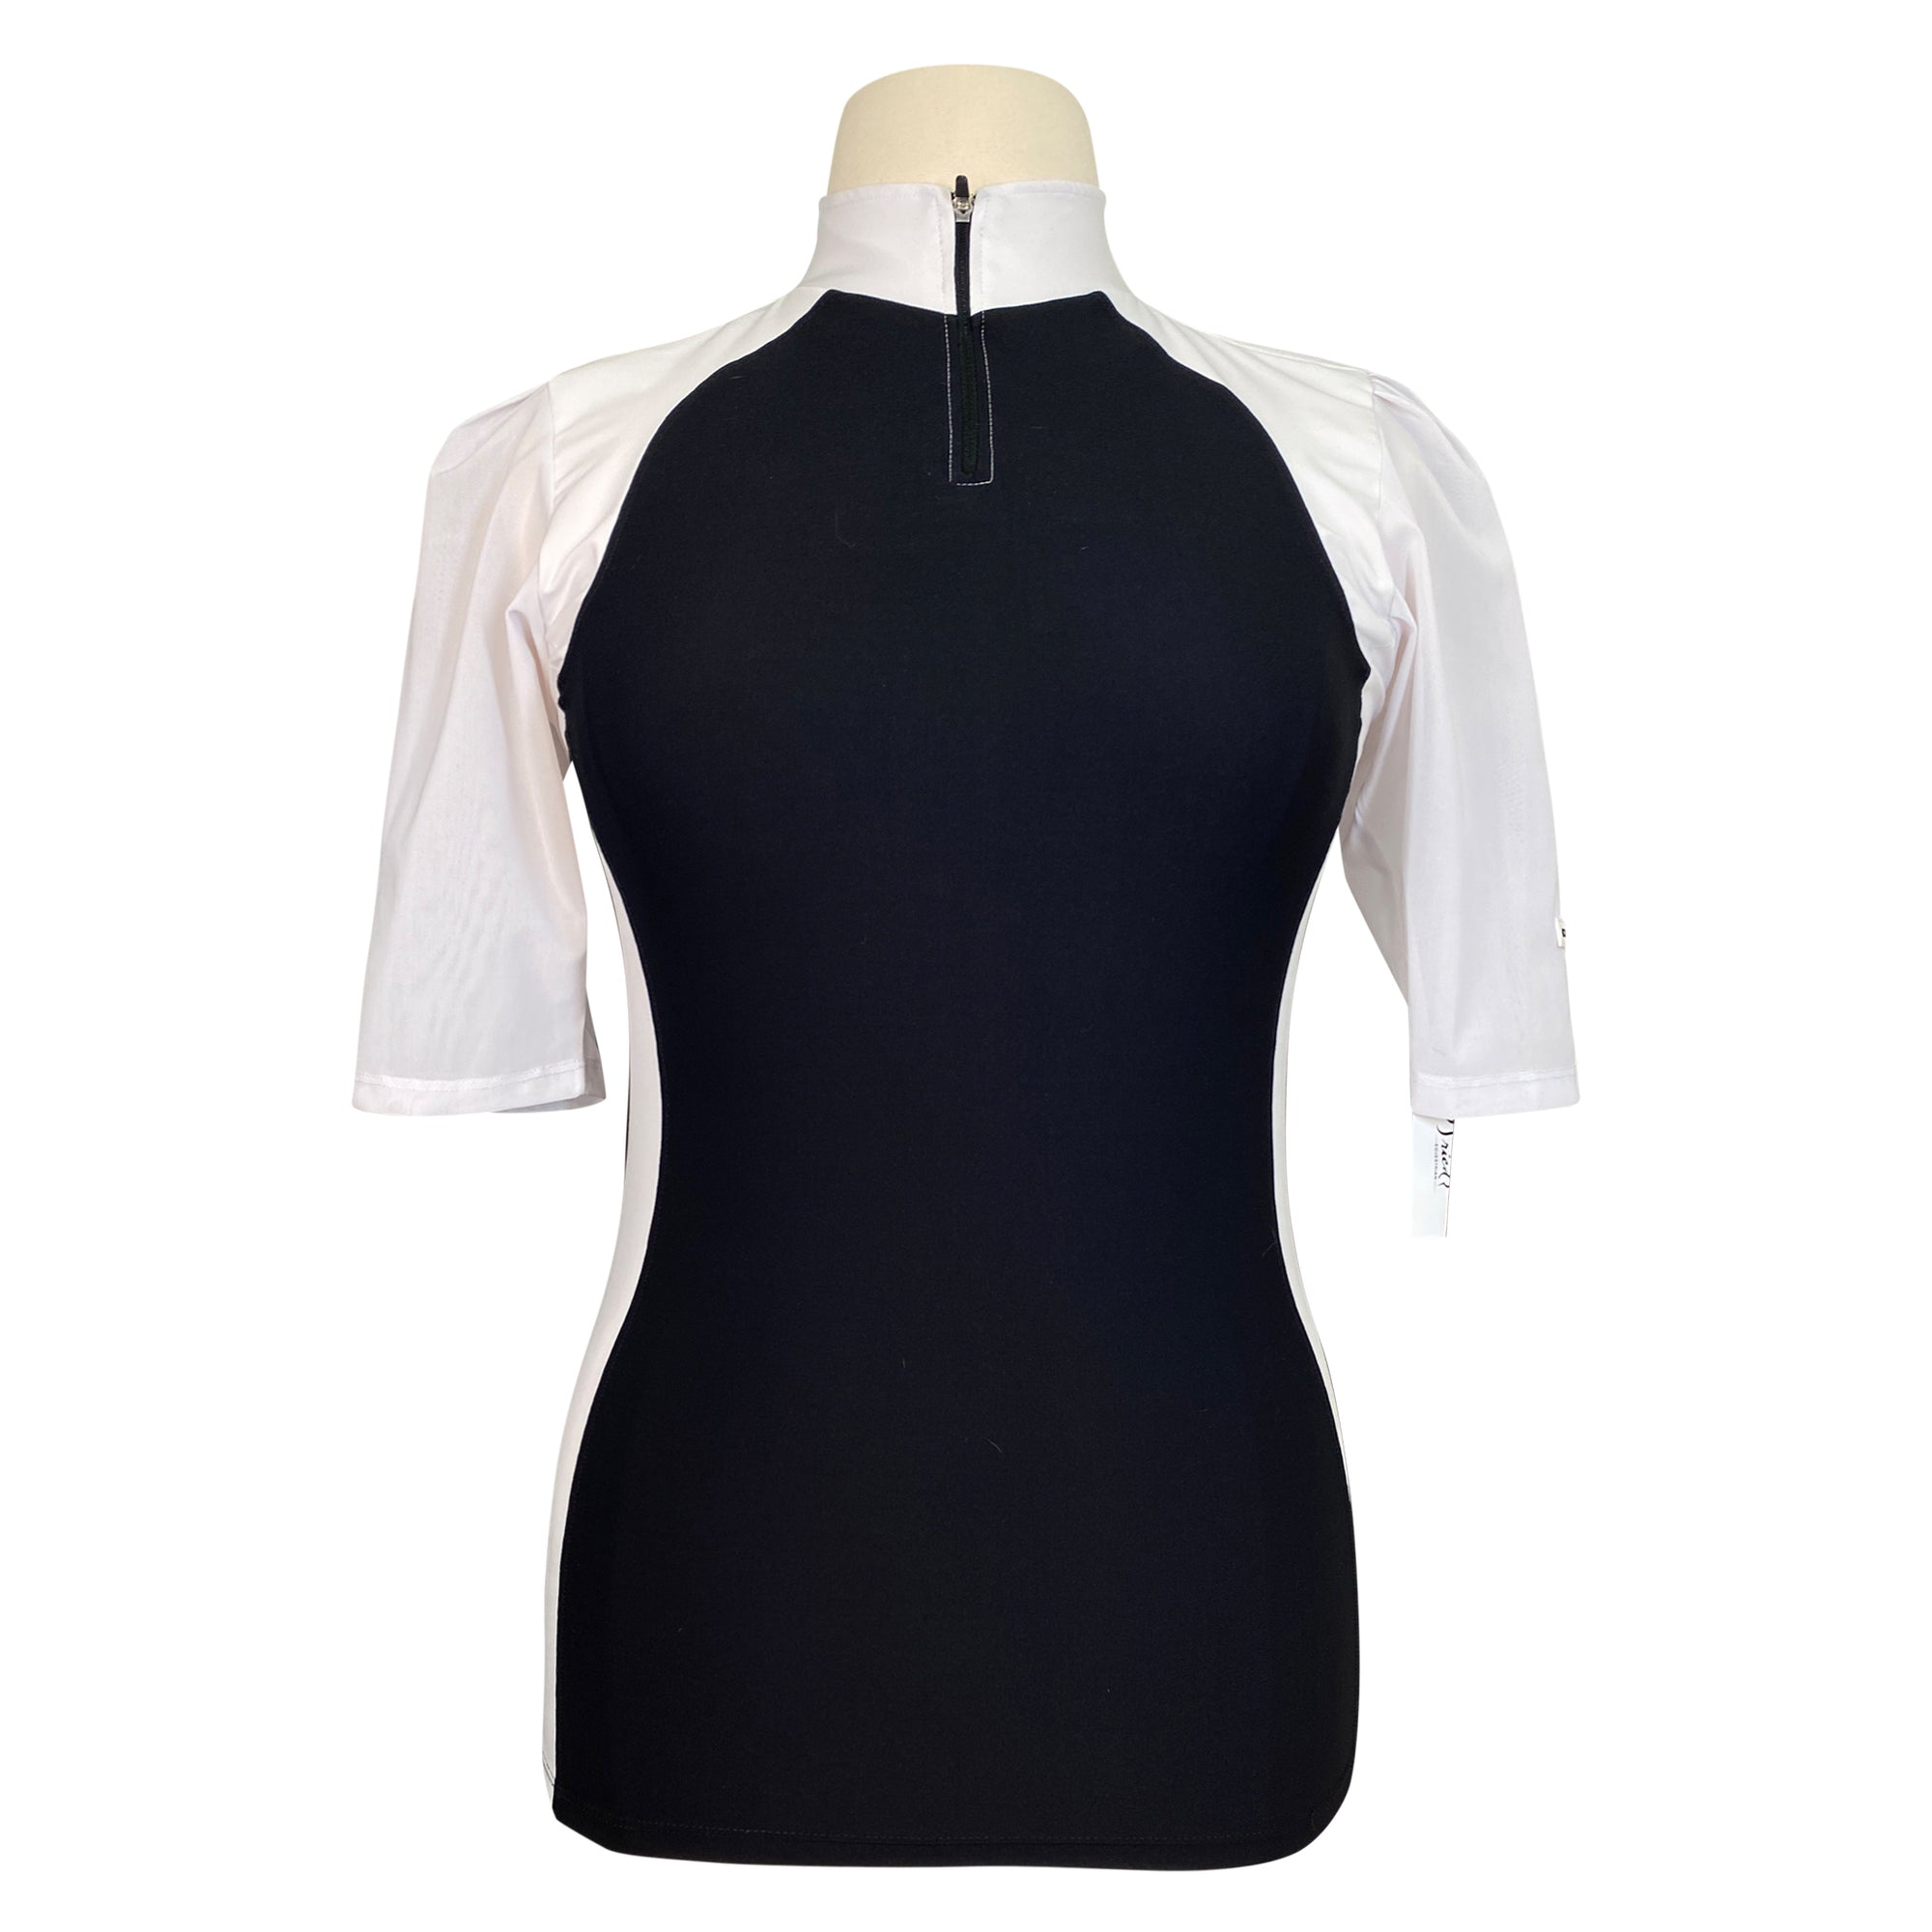 CRINIĒRE 'Alex' Short Sleeve Schooling Shirt in Black/White